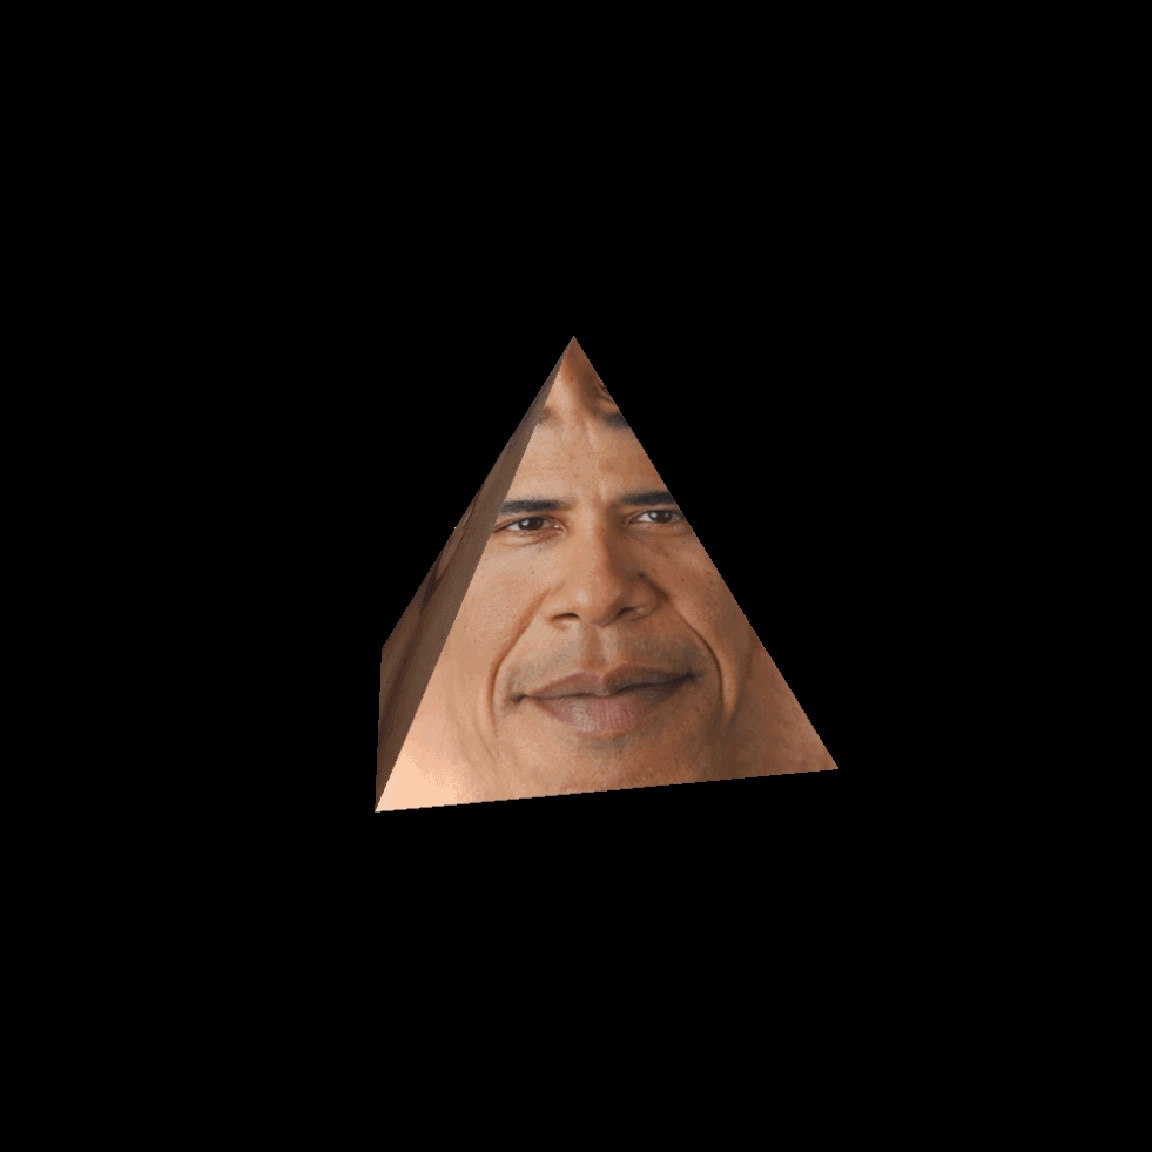 Obama Pyramid